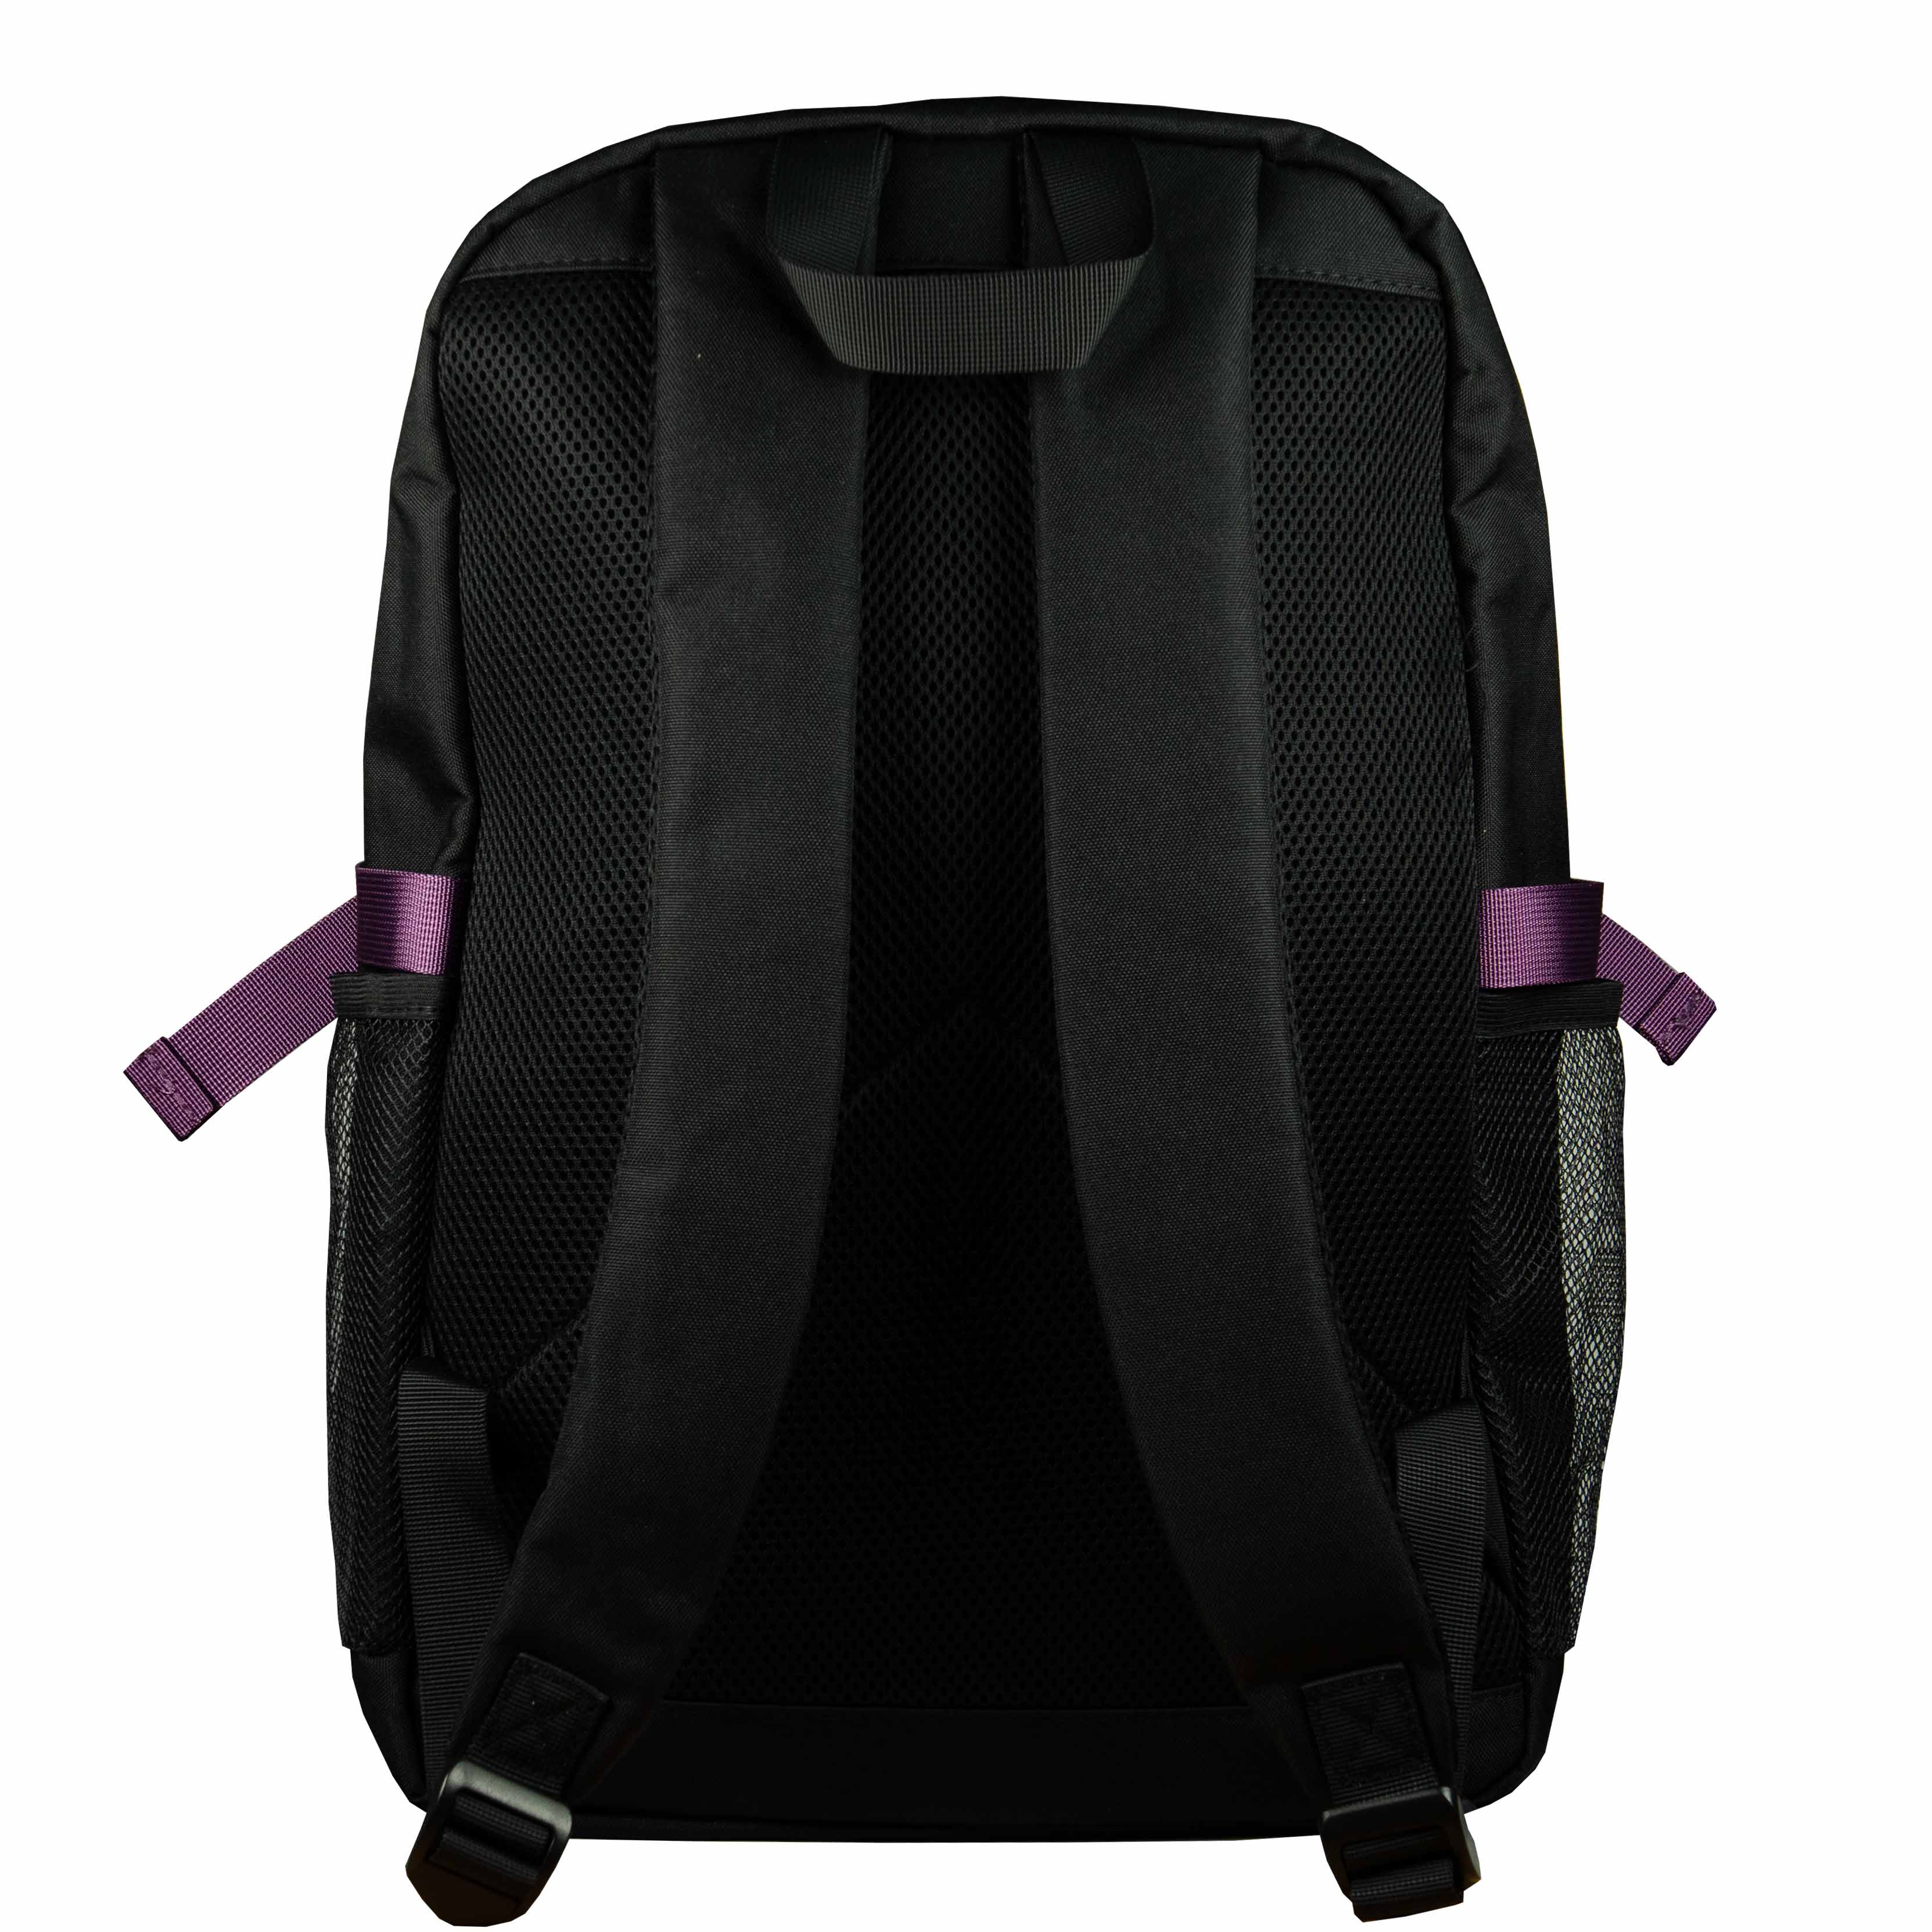 Odorproof backpack